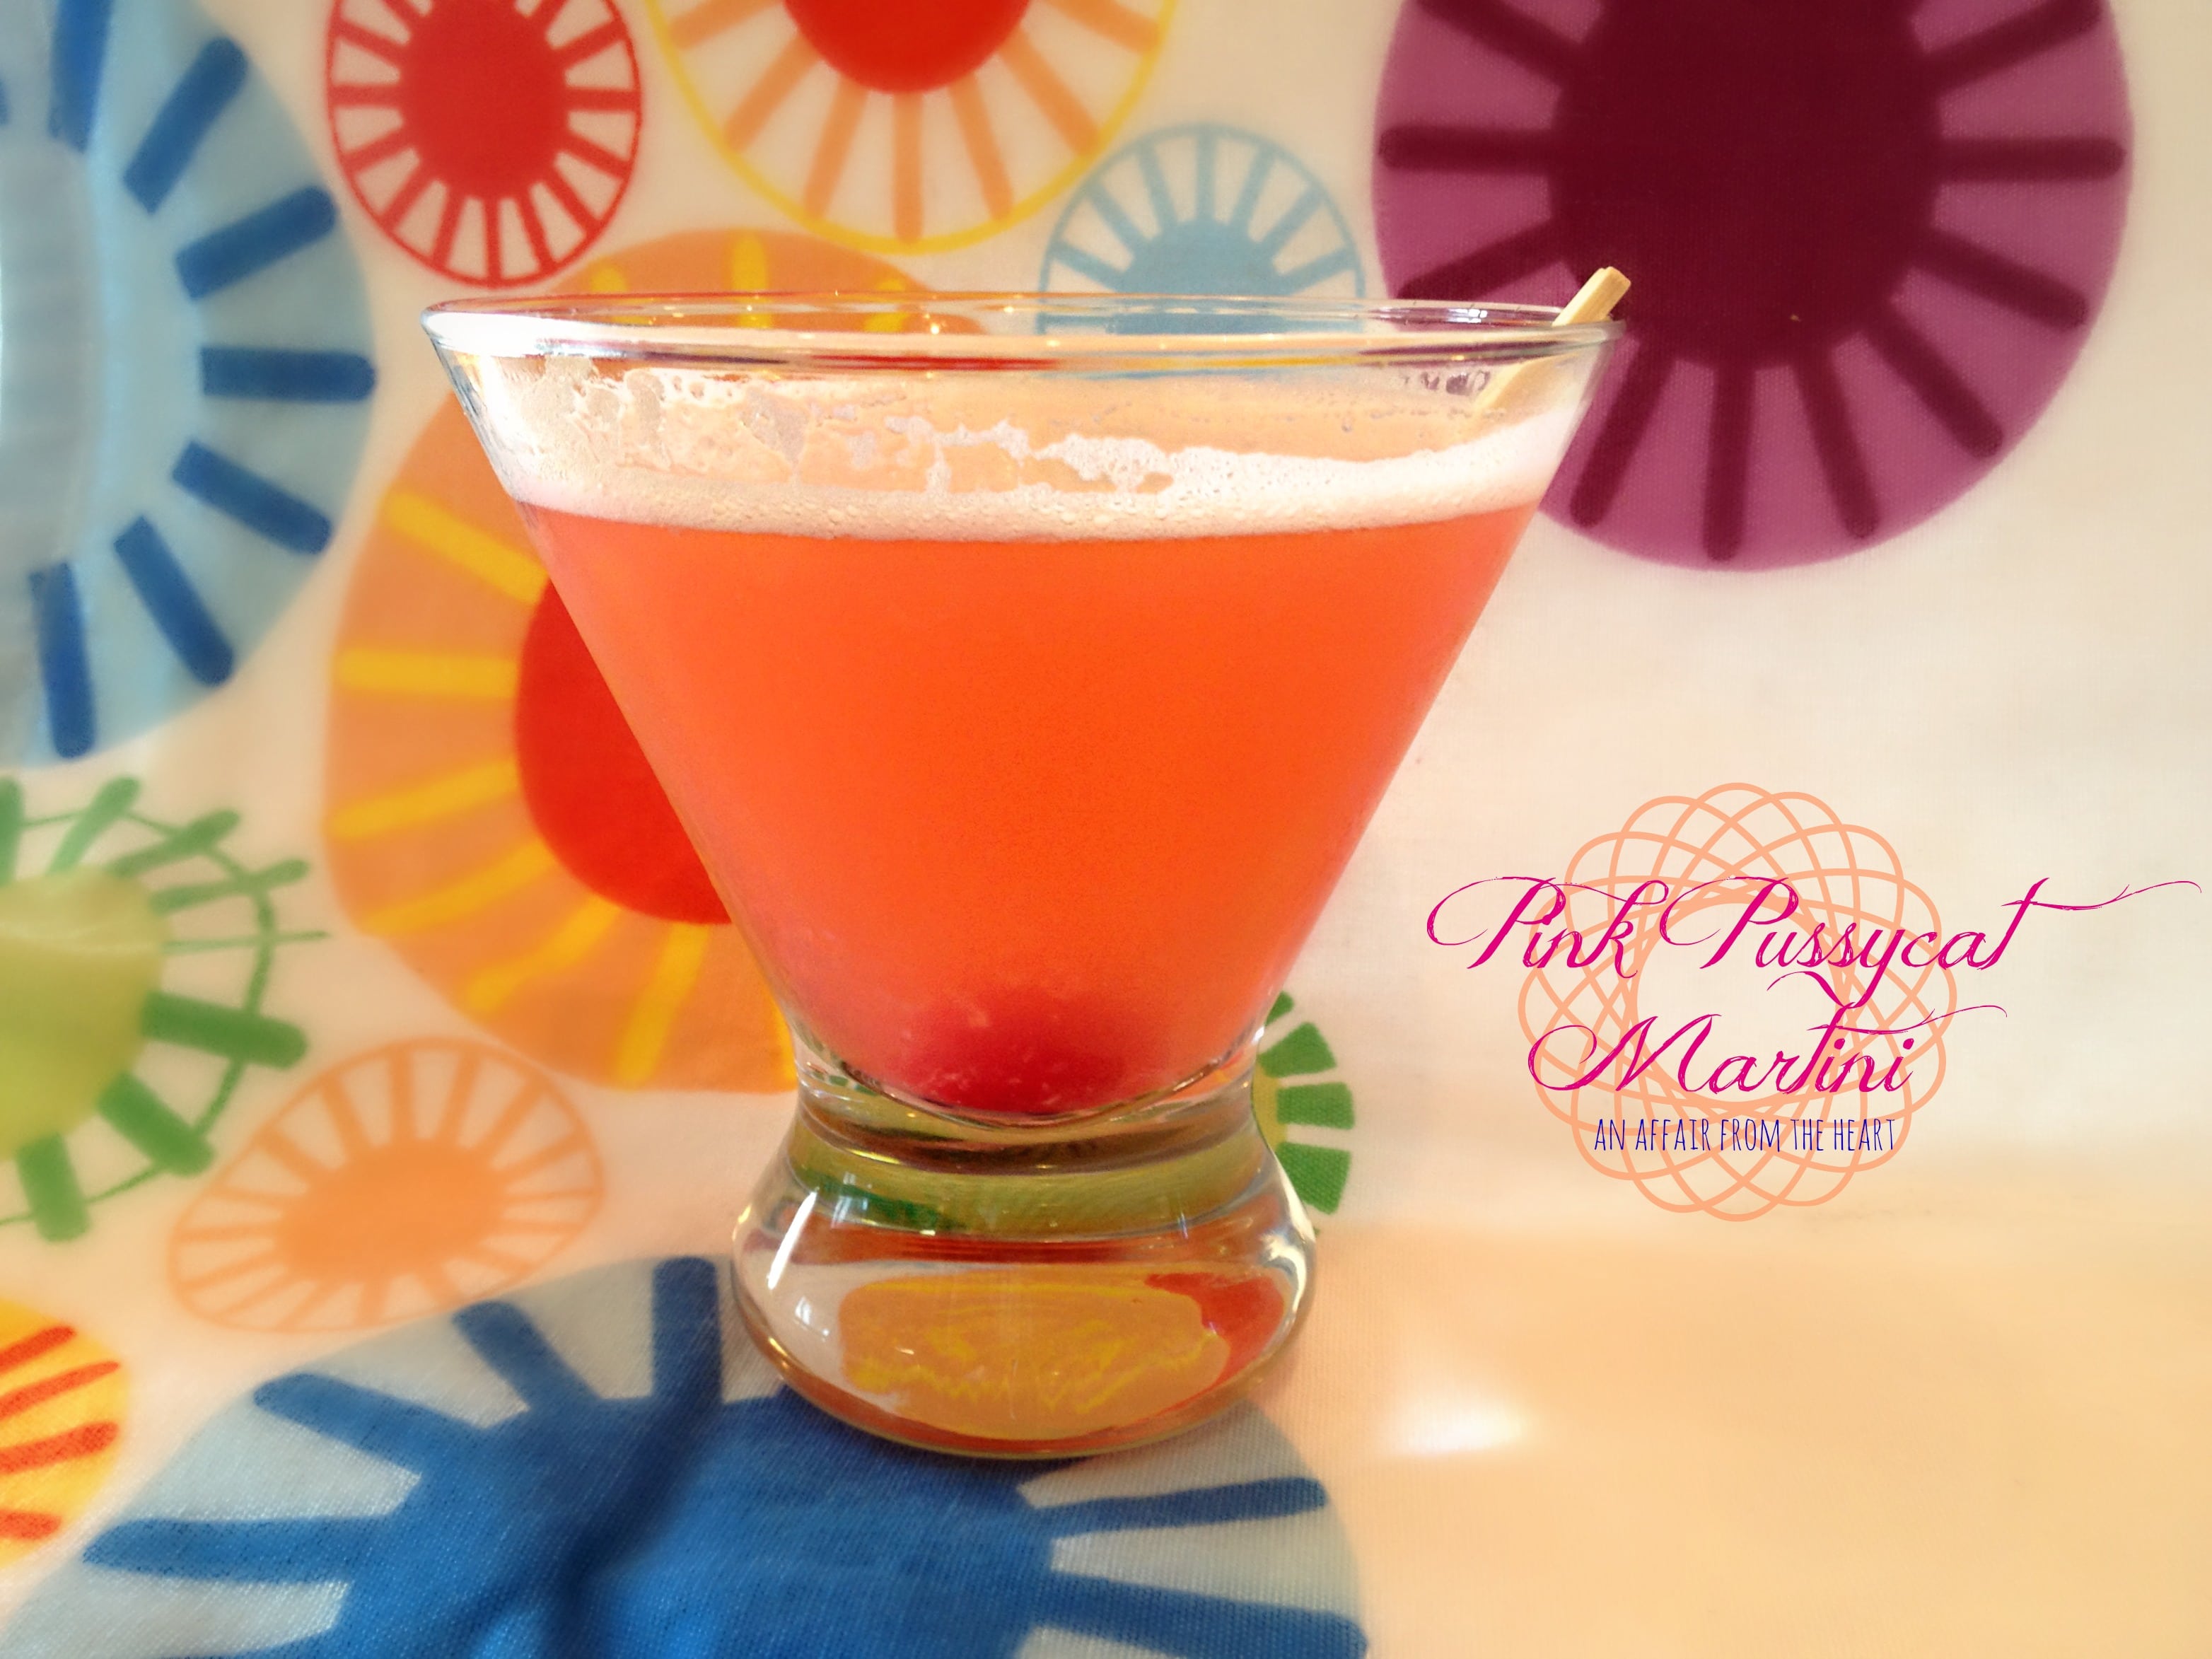 Pink Pussycat Martini